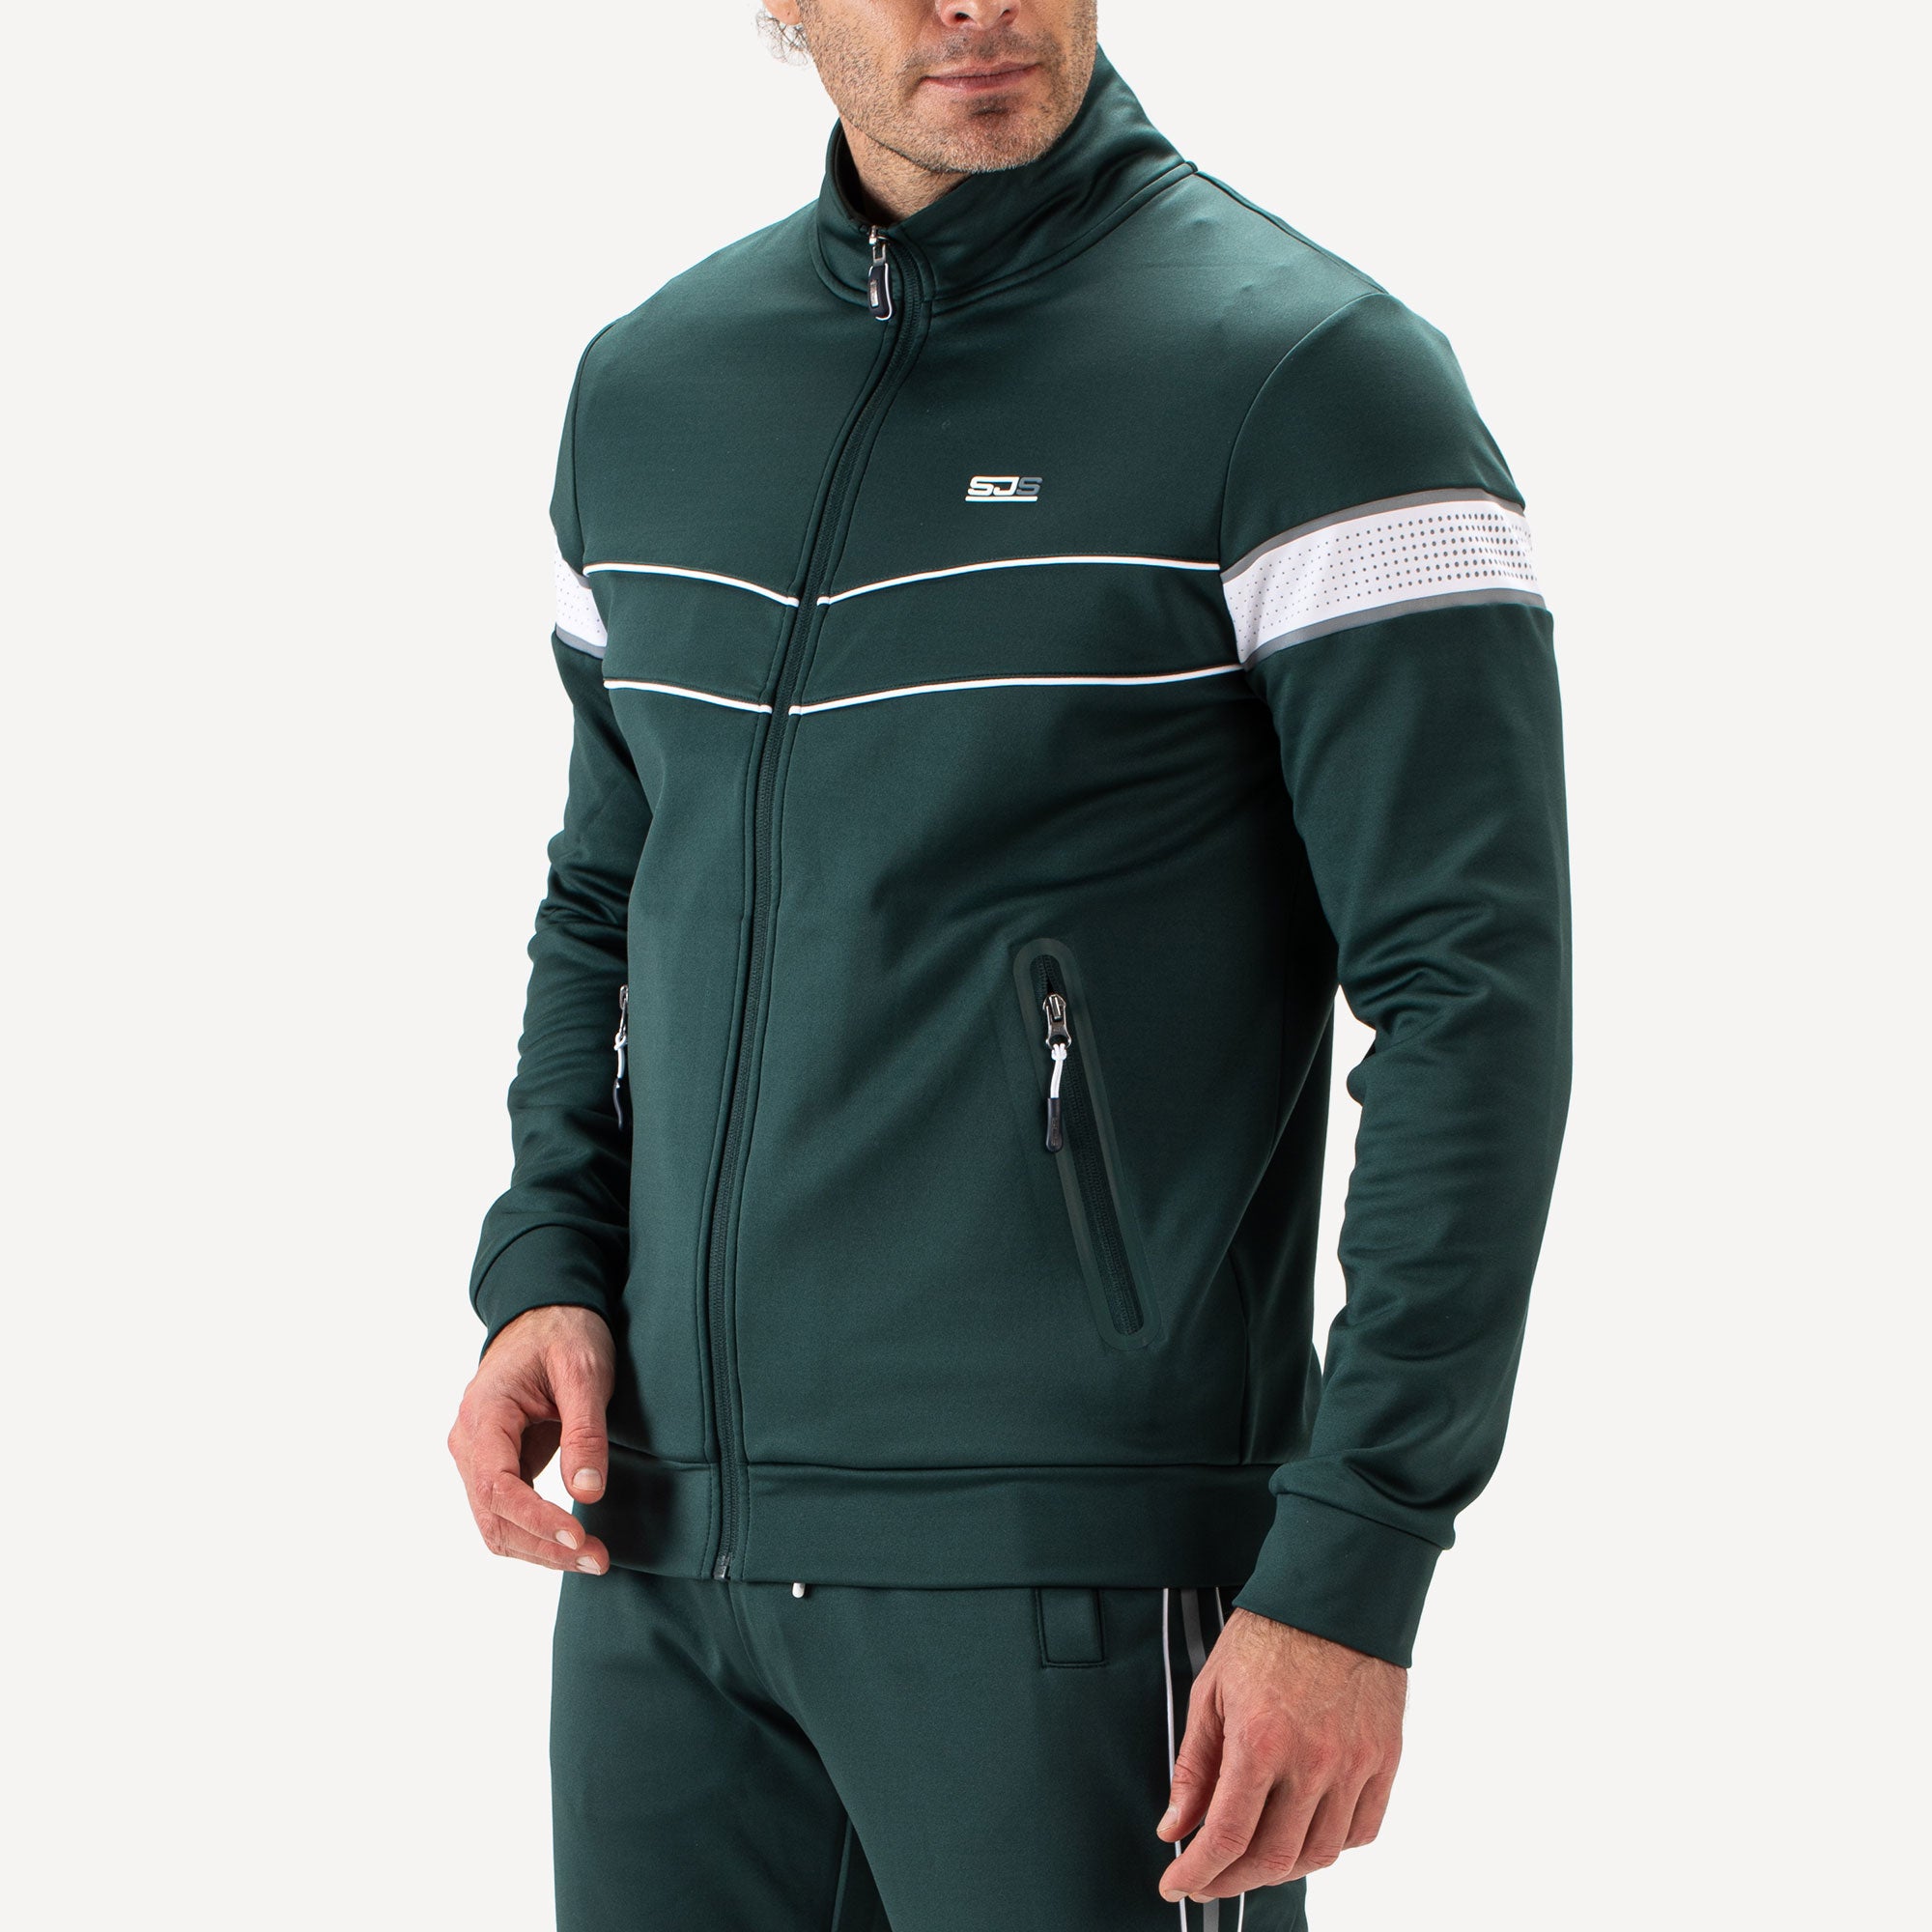 Sjeng Sports Alvar Men's Tennis Jacket - Green (1)